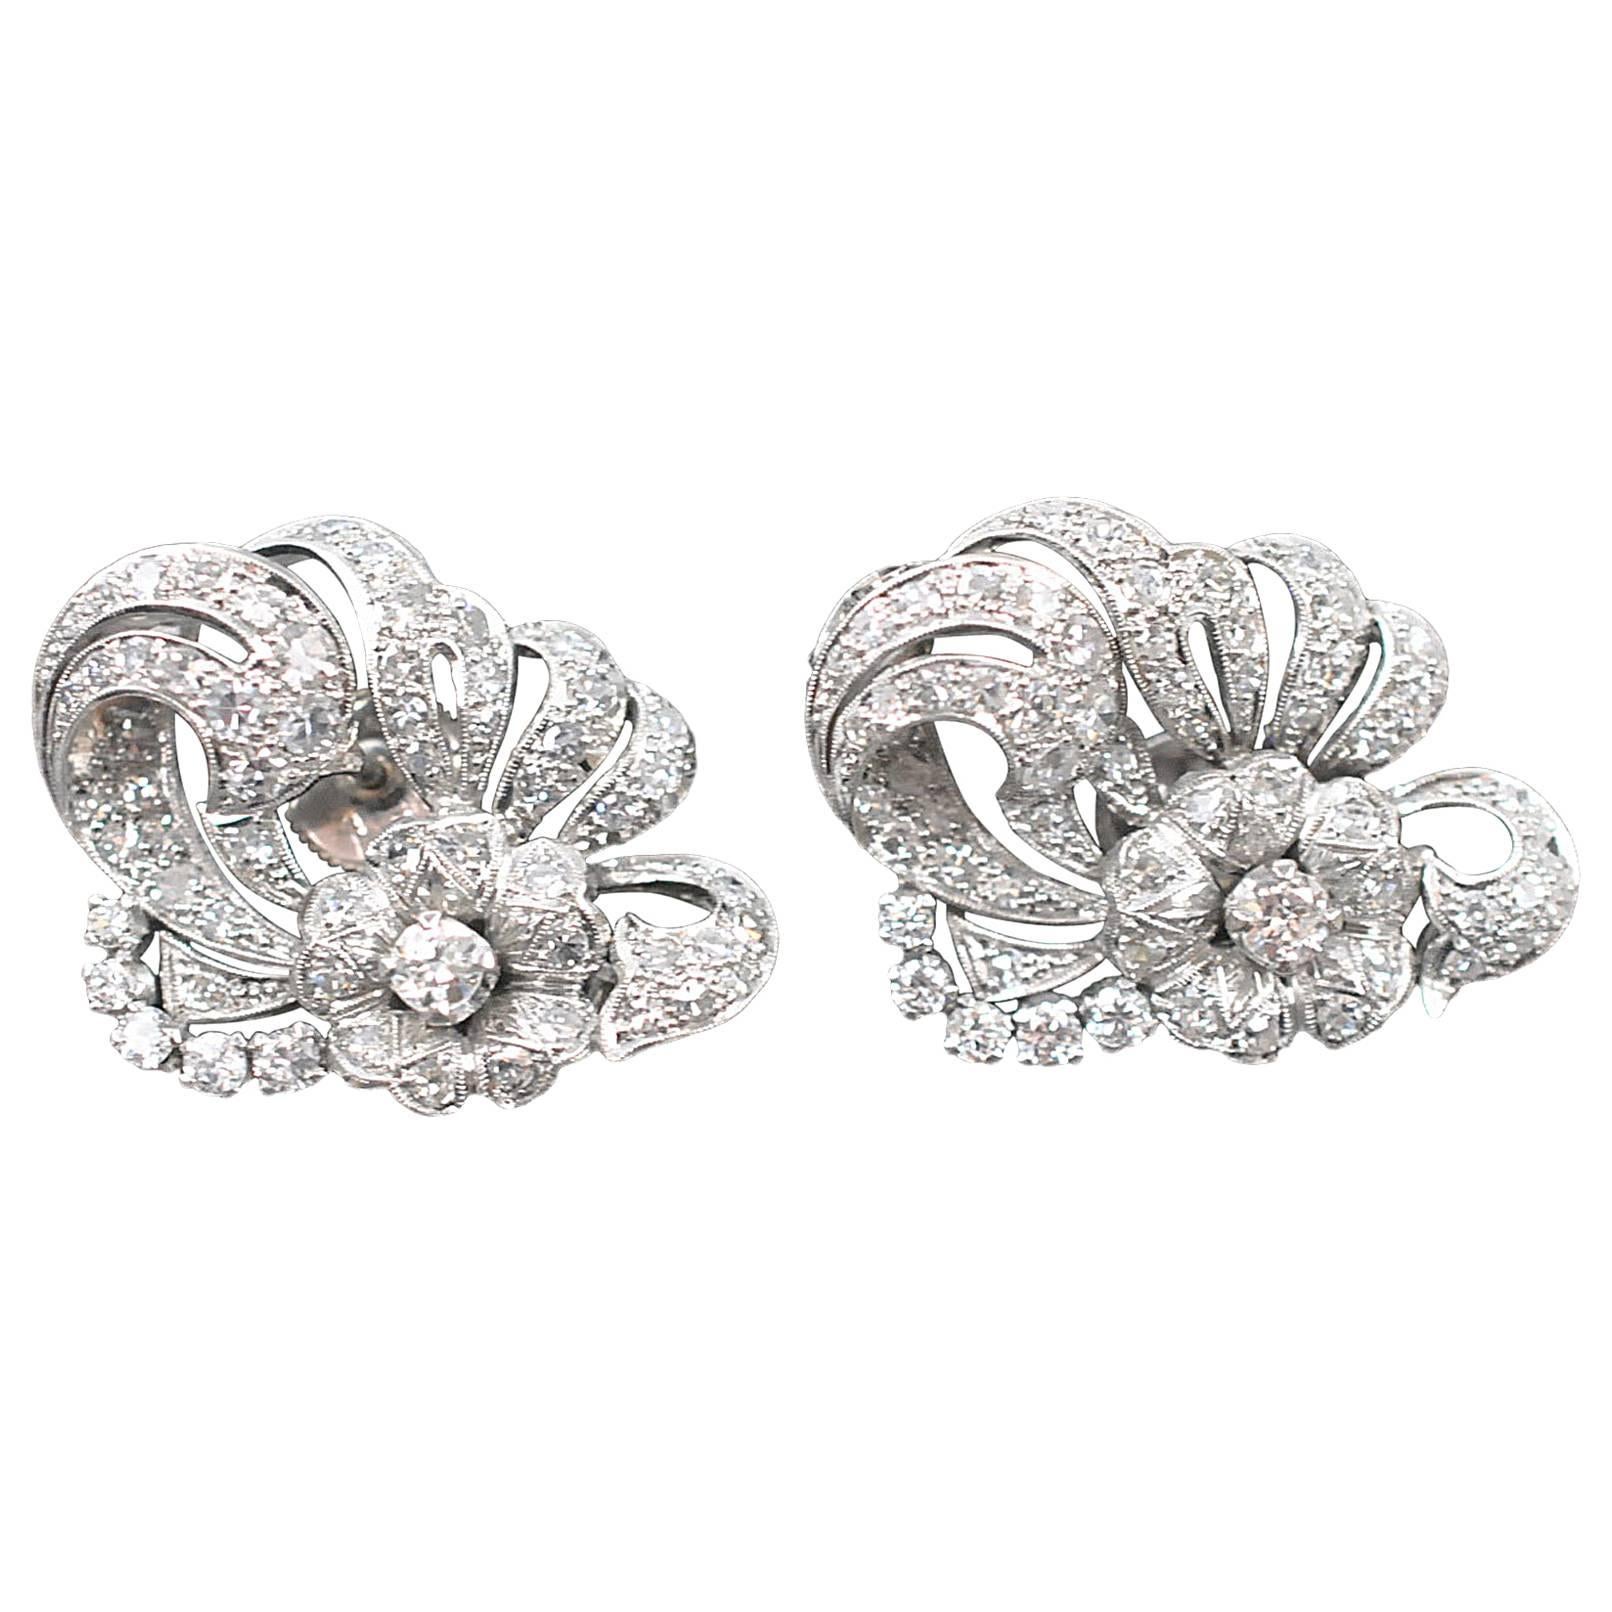 Pair of Platinum European Cut Diamond Earrings 3.5 TW